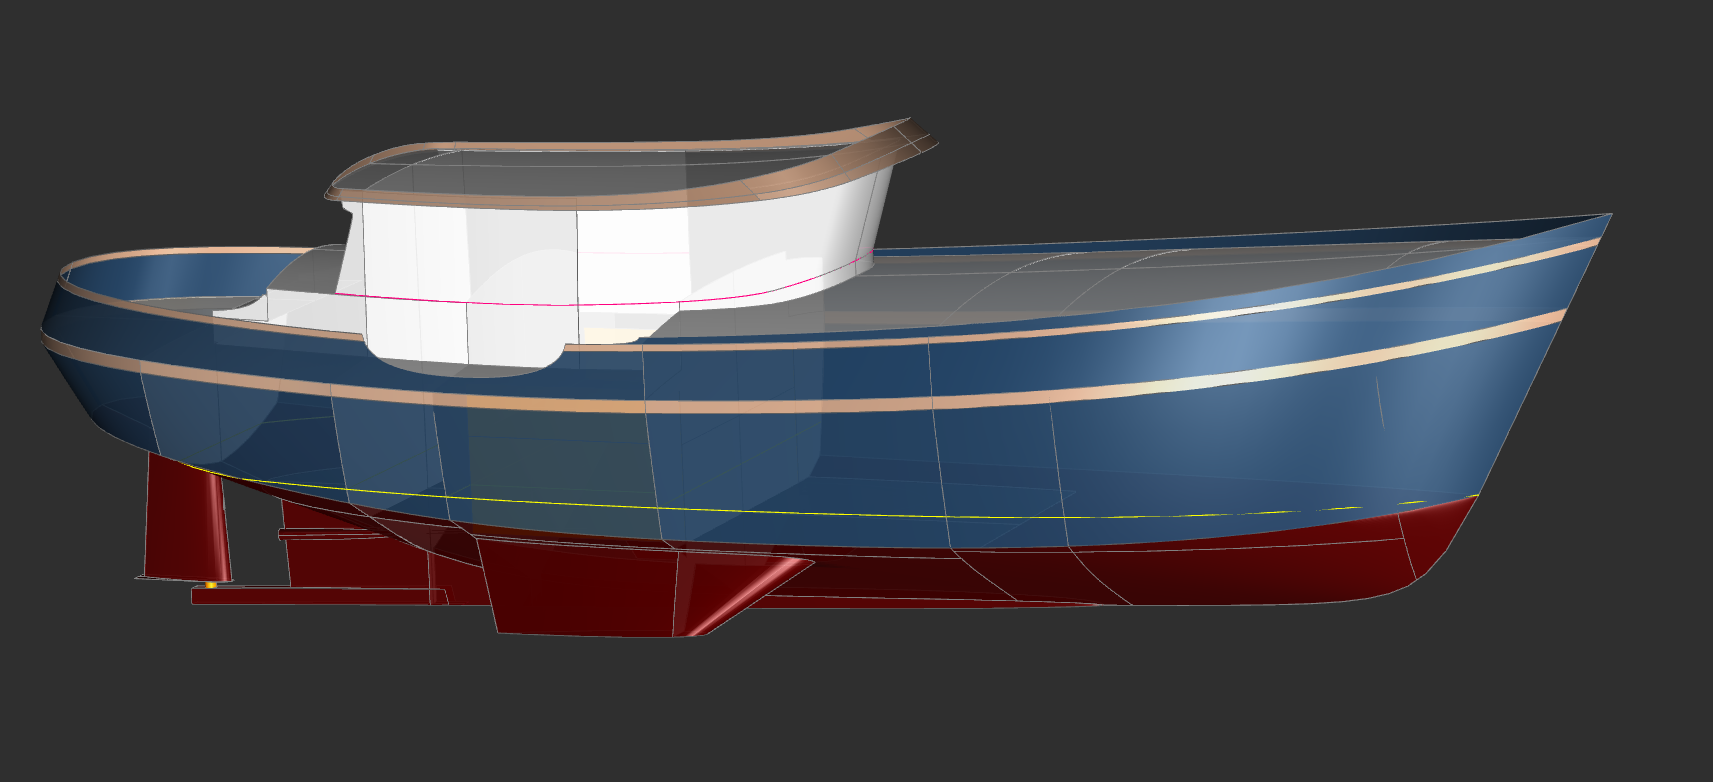 50' Trawler Yacht FAR HORIZON - Kasten Marine Design, Inc.